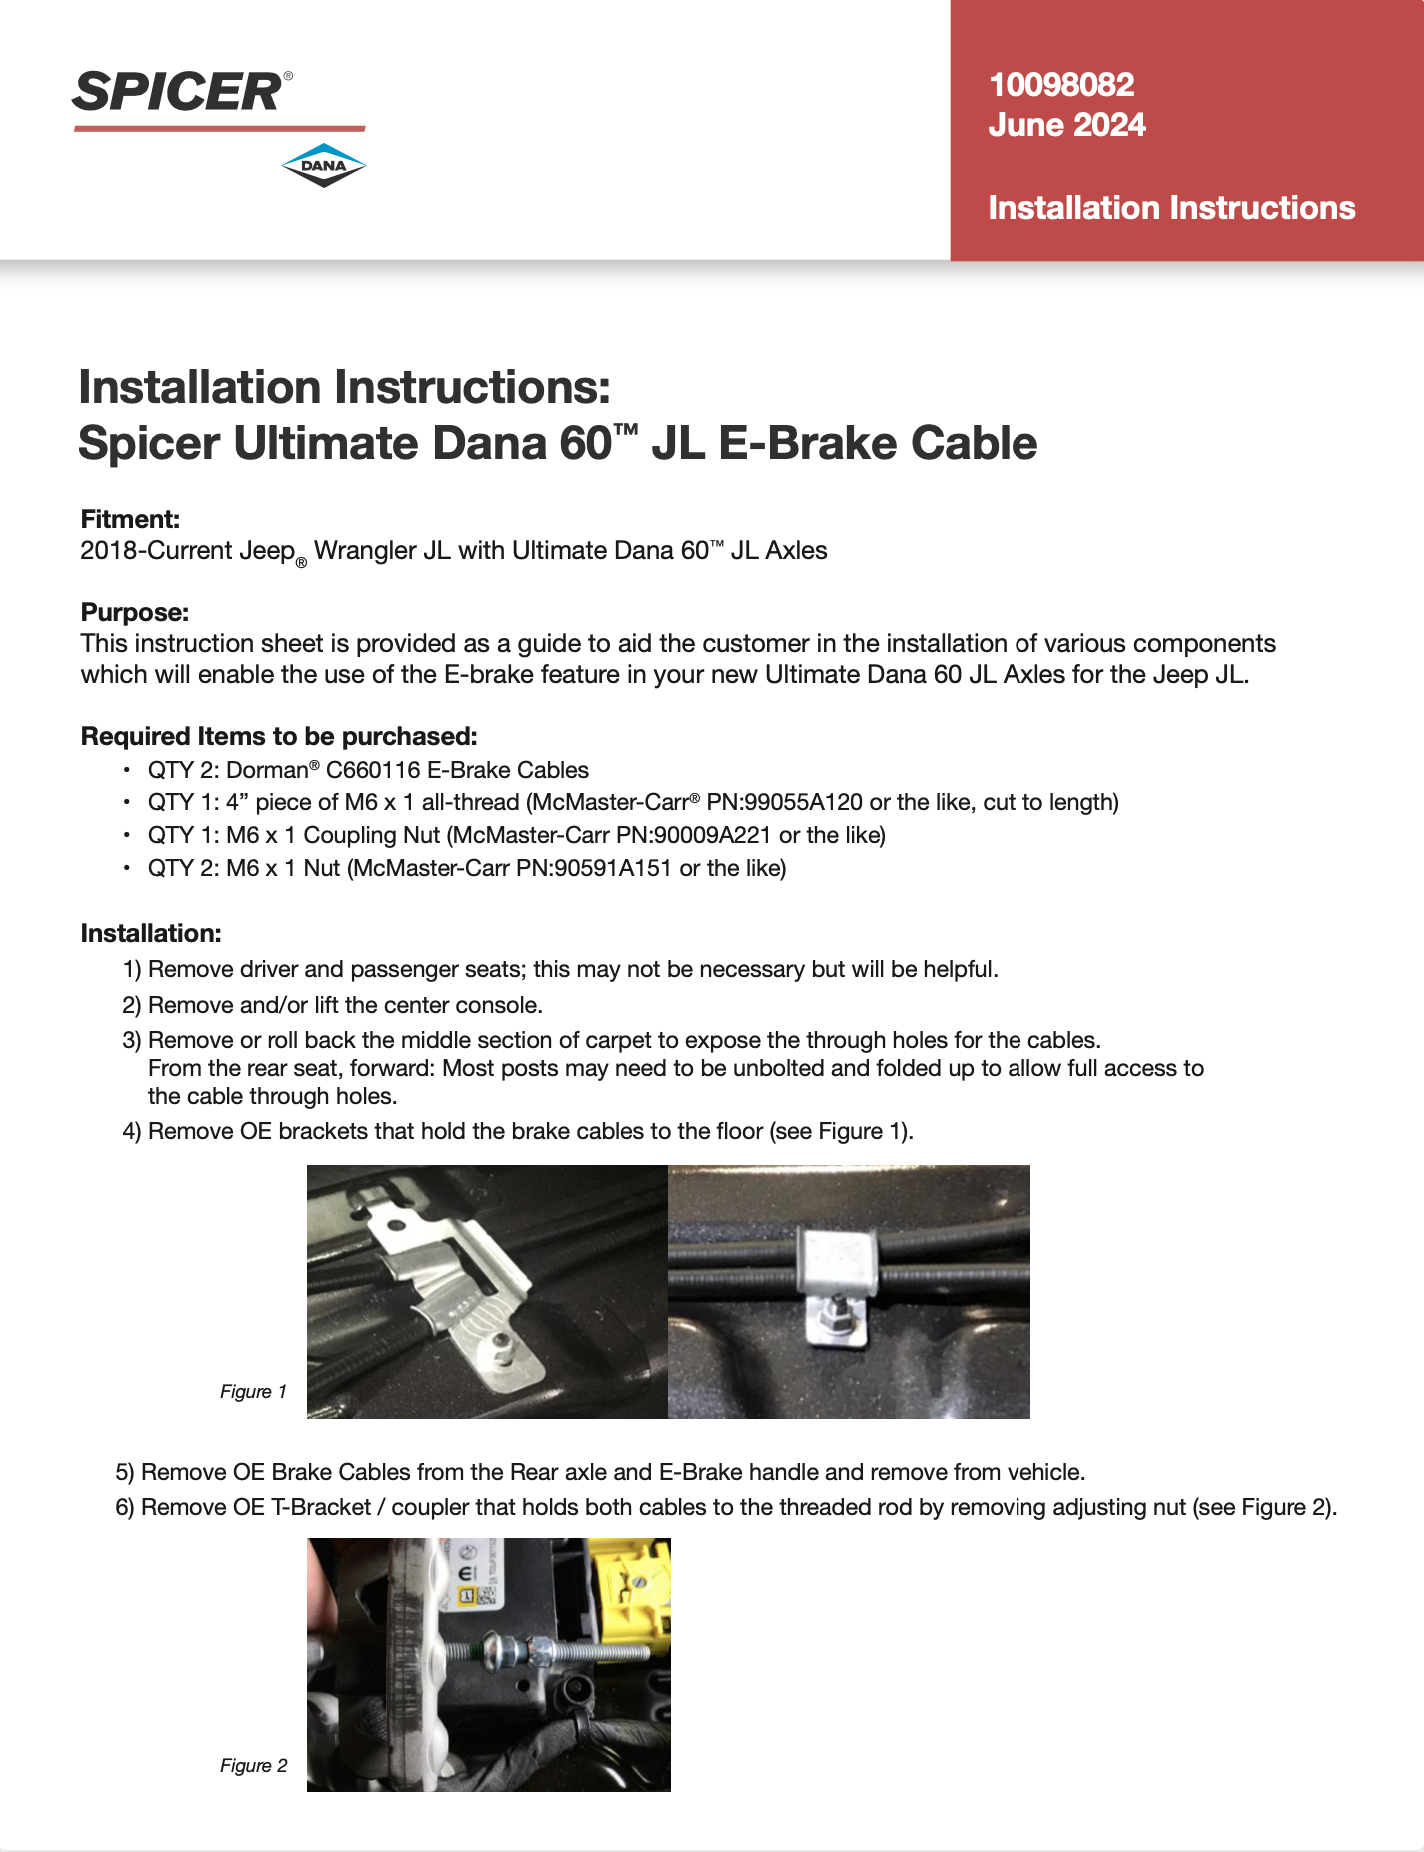 Installation Instructions: Spicer Ultimate Dana 60 JL E-Brake Cable